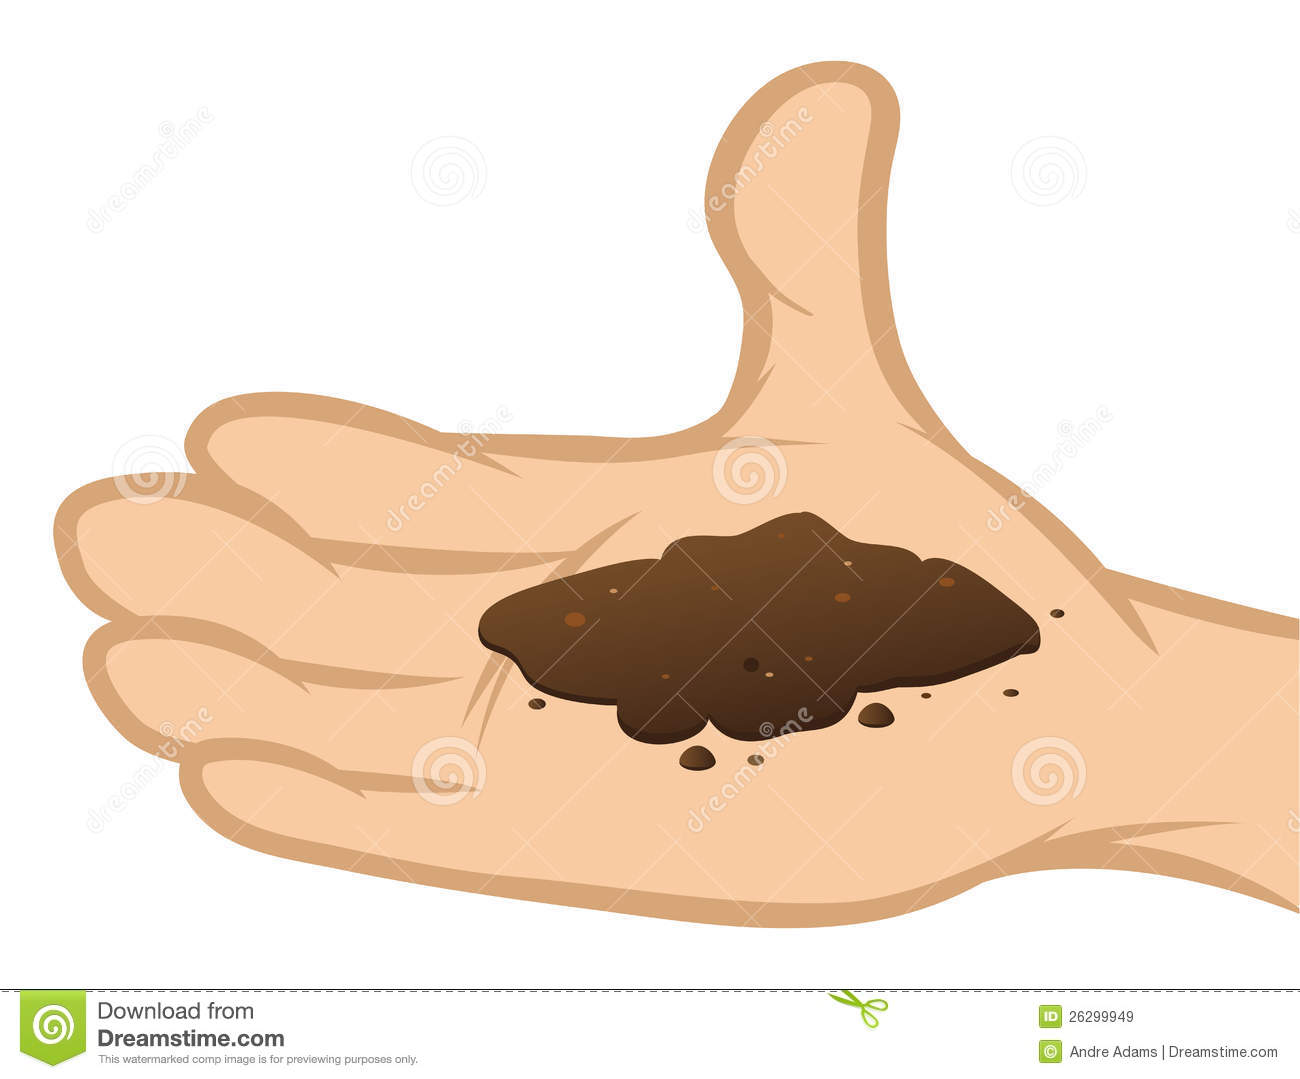 dirt clipart hand holding